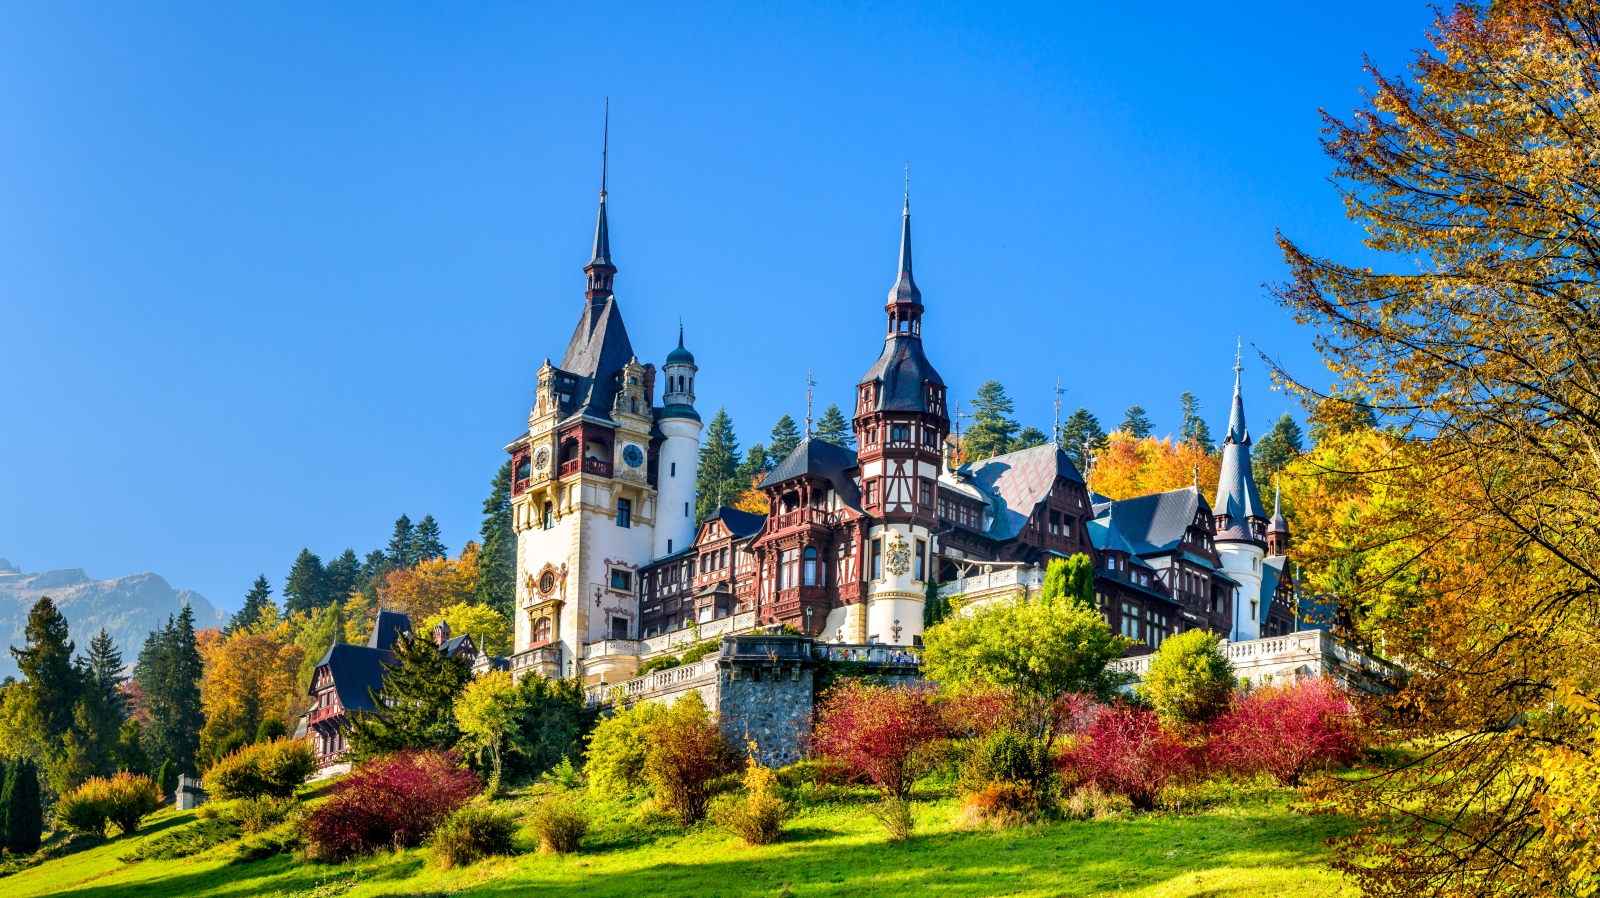 Peles Castle in Romania